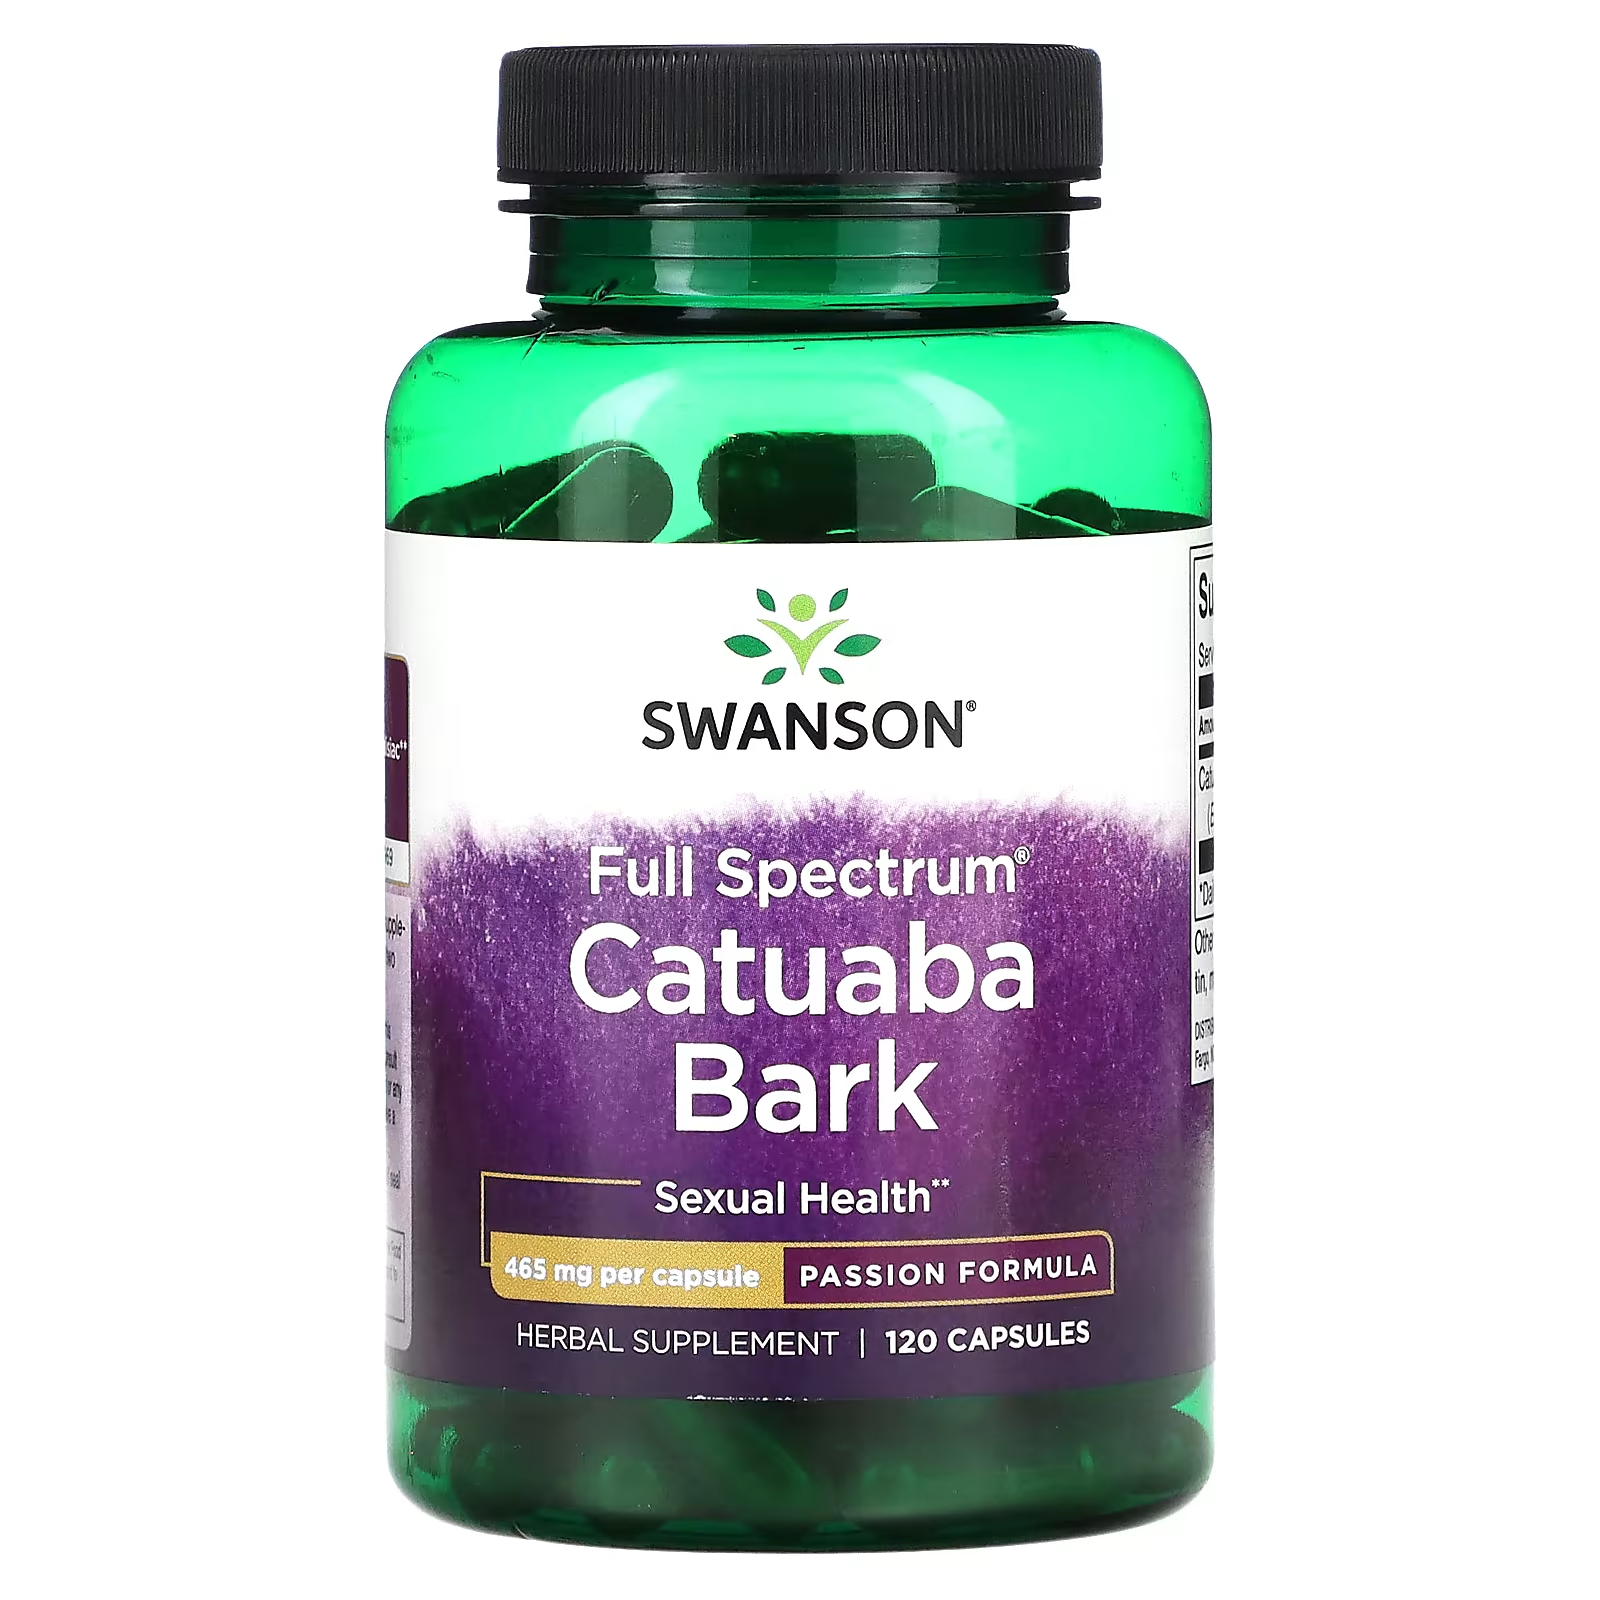 Растительная добавка Swanson Full Spectrum Catuaba Bark 465 мг, 120 капсул swanson full spectrum кора катуабы 465 мг 60 капсул